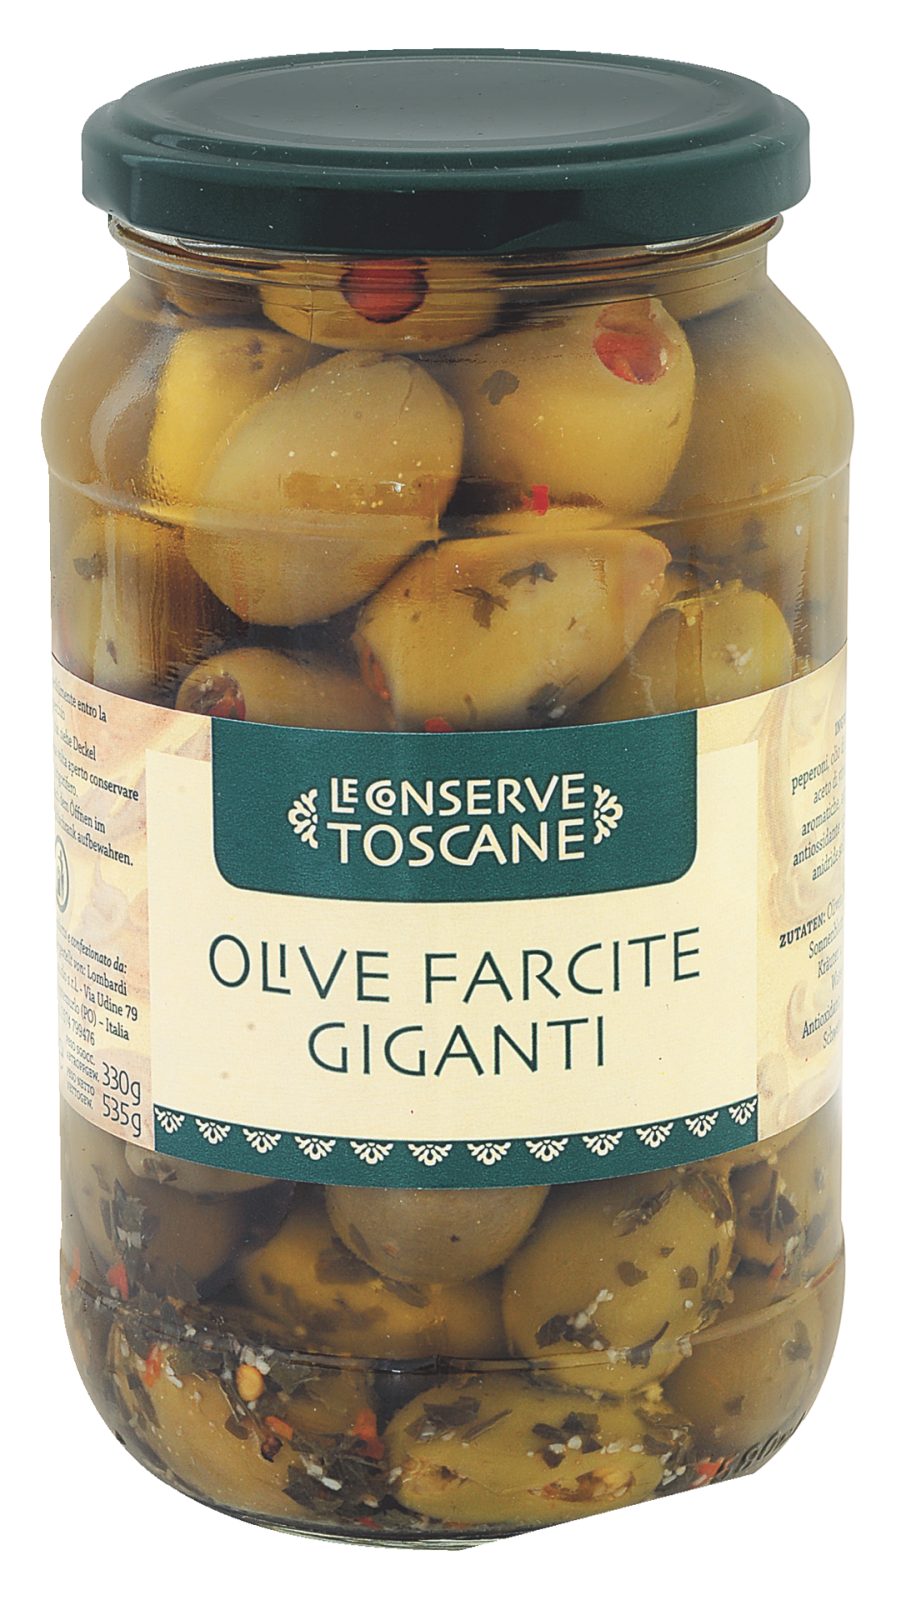 Olive Farcite Giganti